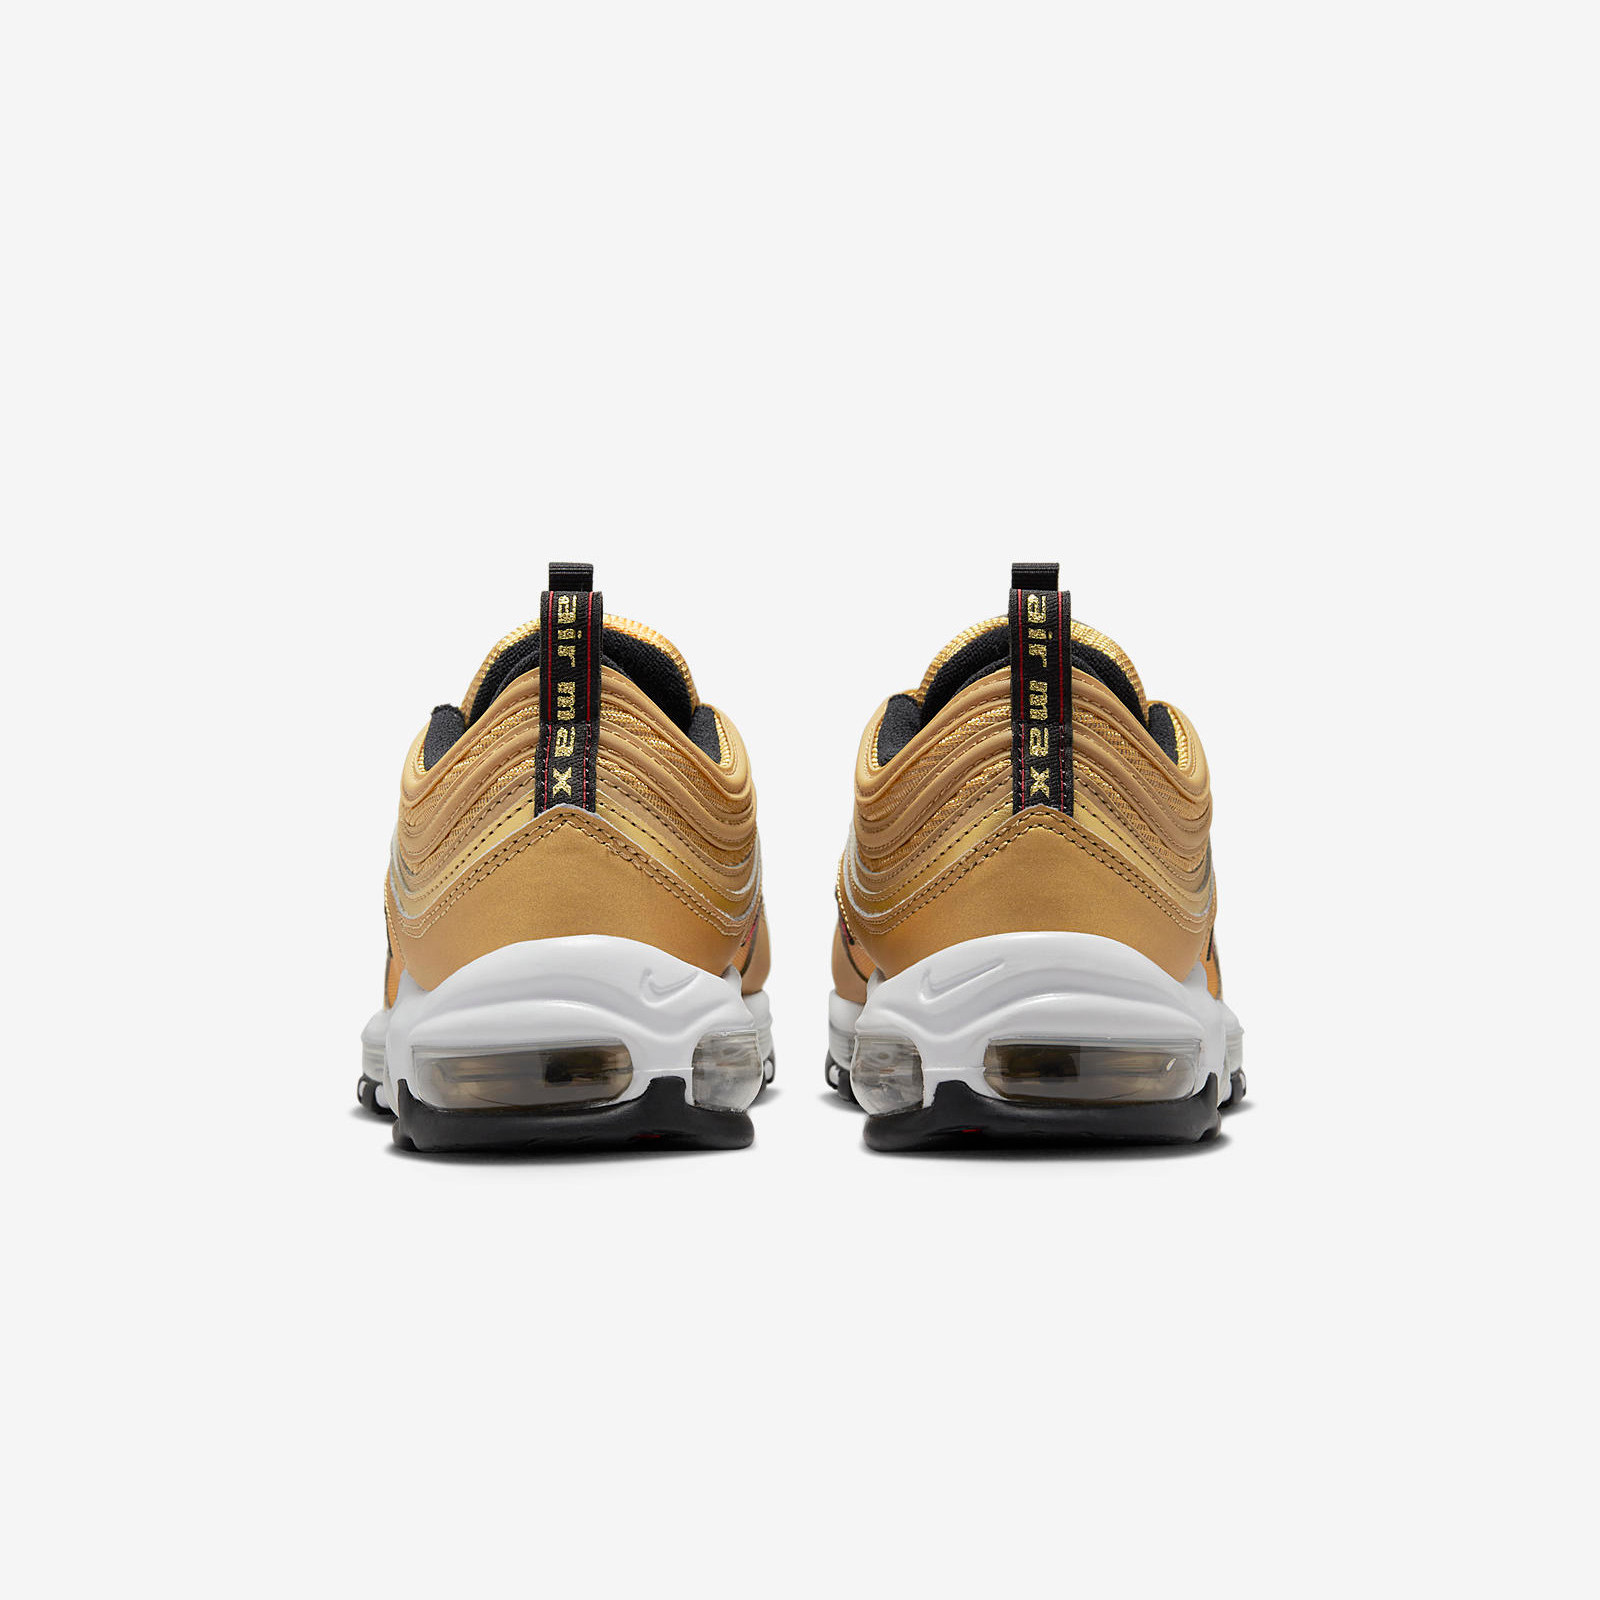 Nike Air Max 97 OG
« Gold Bullet »